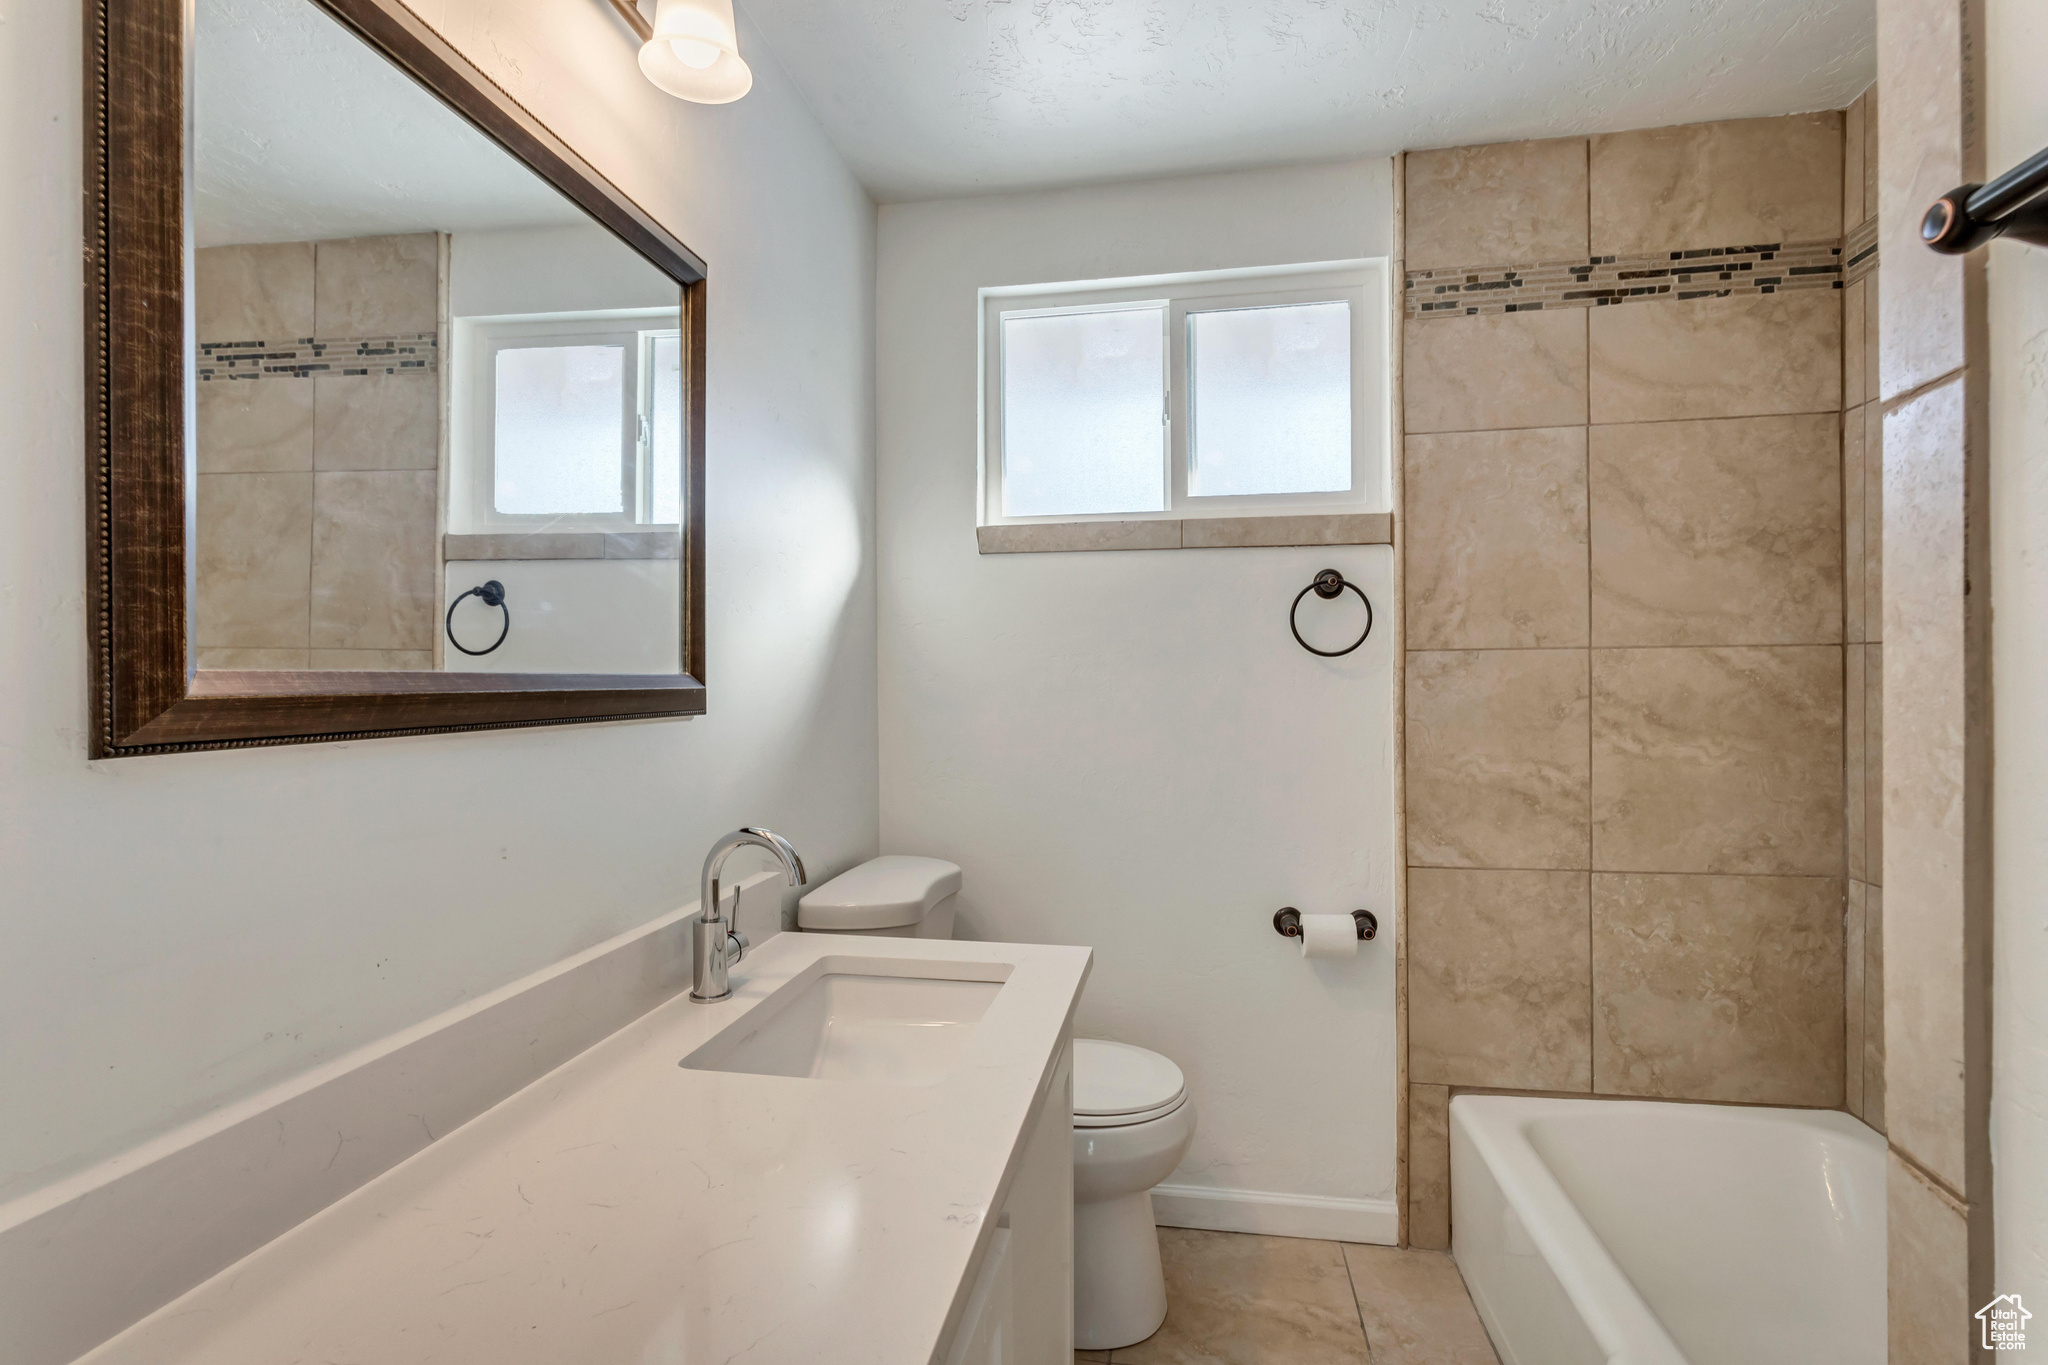 Full bathroom with tile flooring, tiled shower / bath, large vanity, and toilet